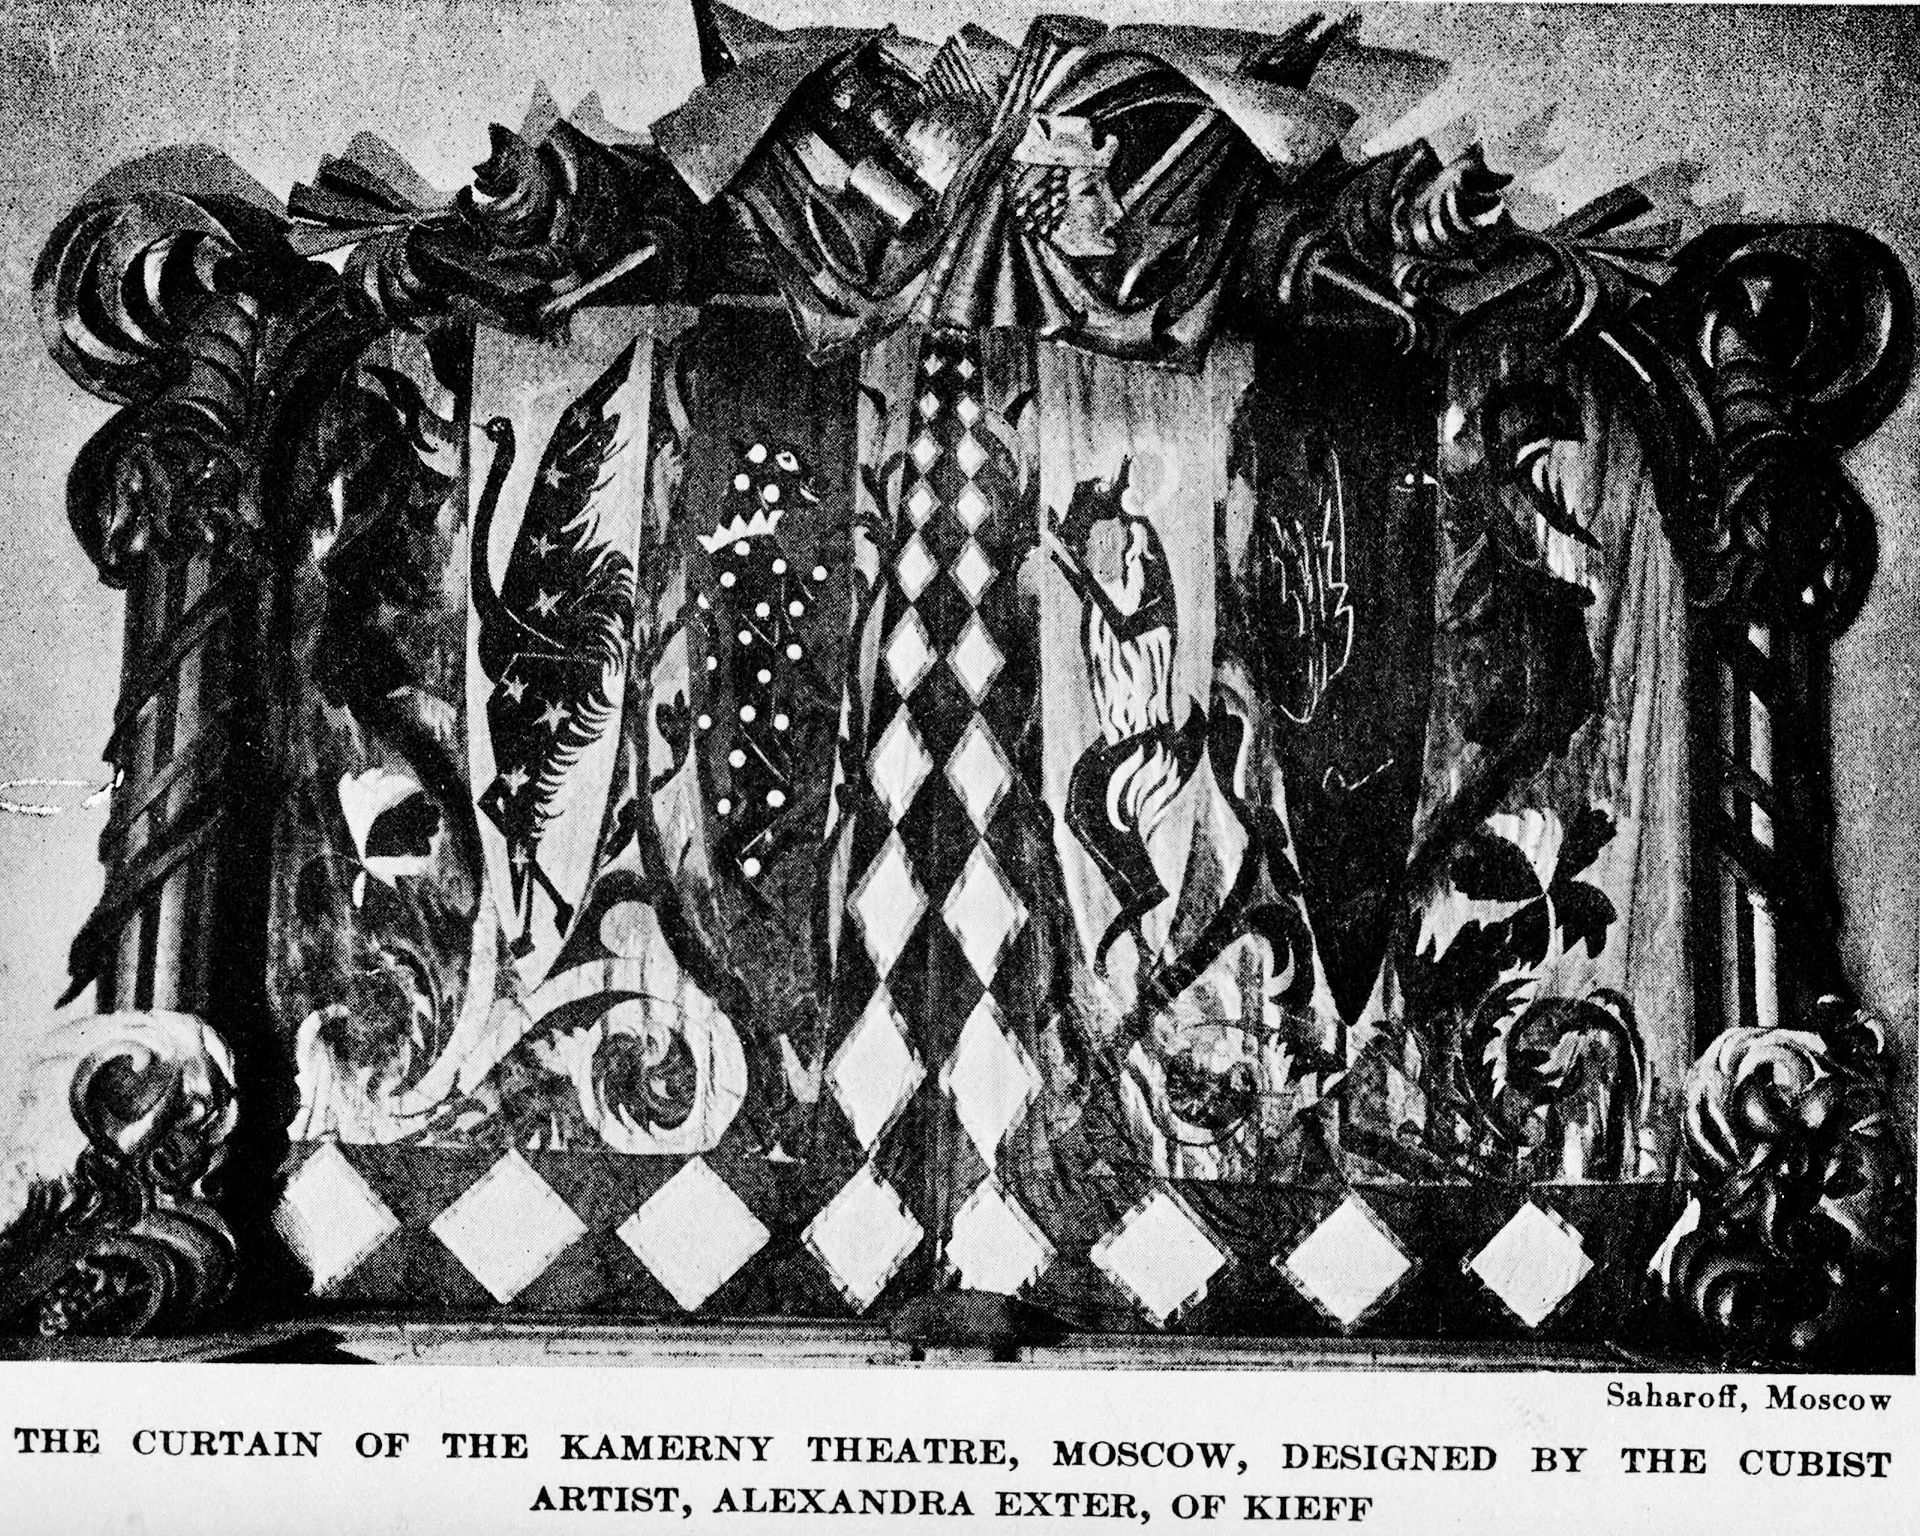 Alexandra Exter’s 1921 curtain design, Moscow